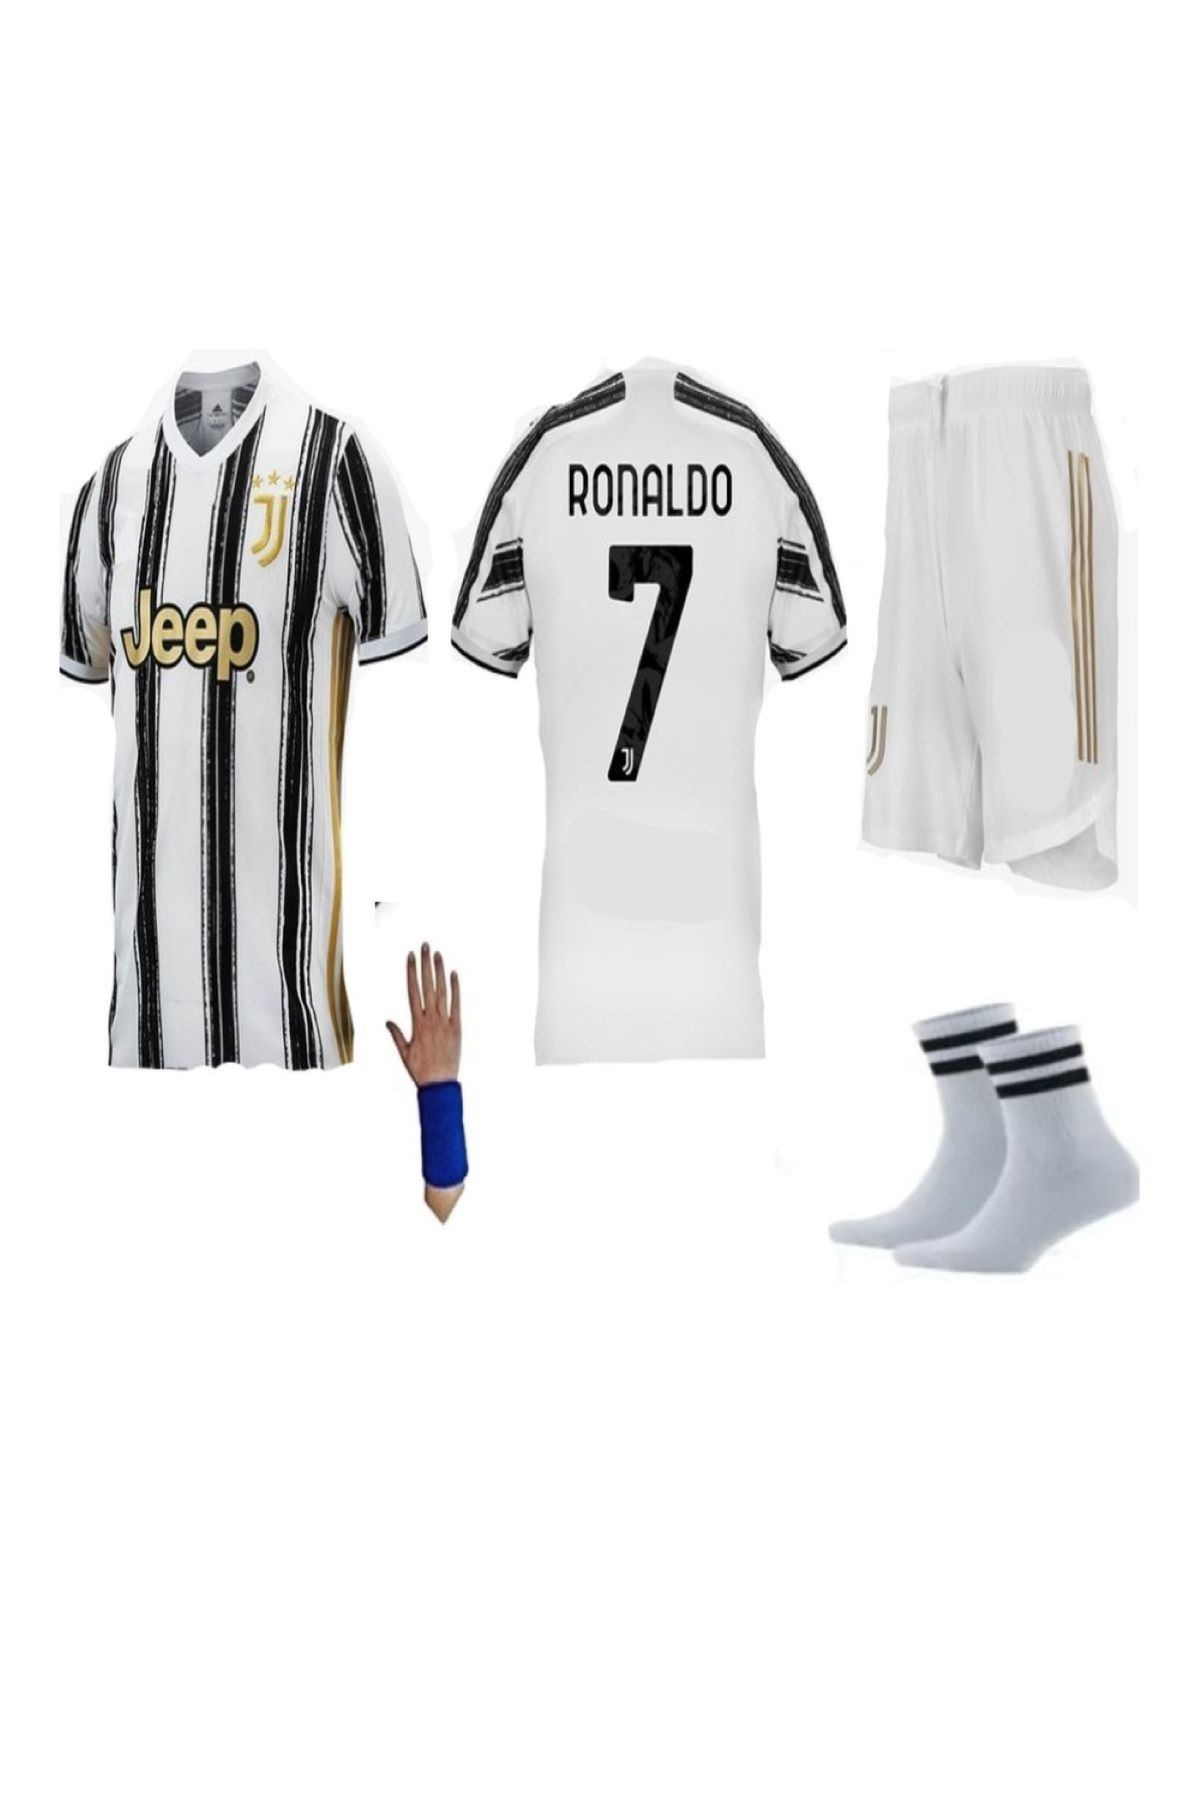 yenteks Juventus Ronaldo Beyaz Retro Iç Saha Çocuk Futbol Forması 4'lü Set 21/22 Sezon 87847